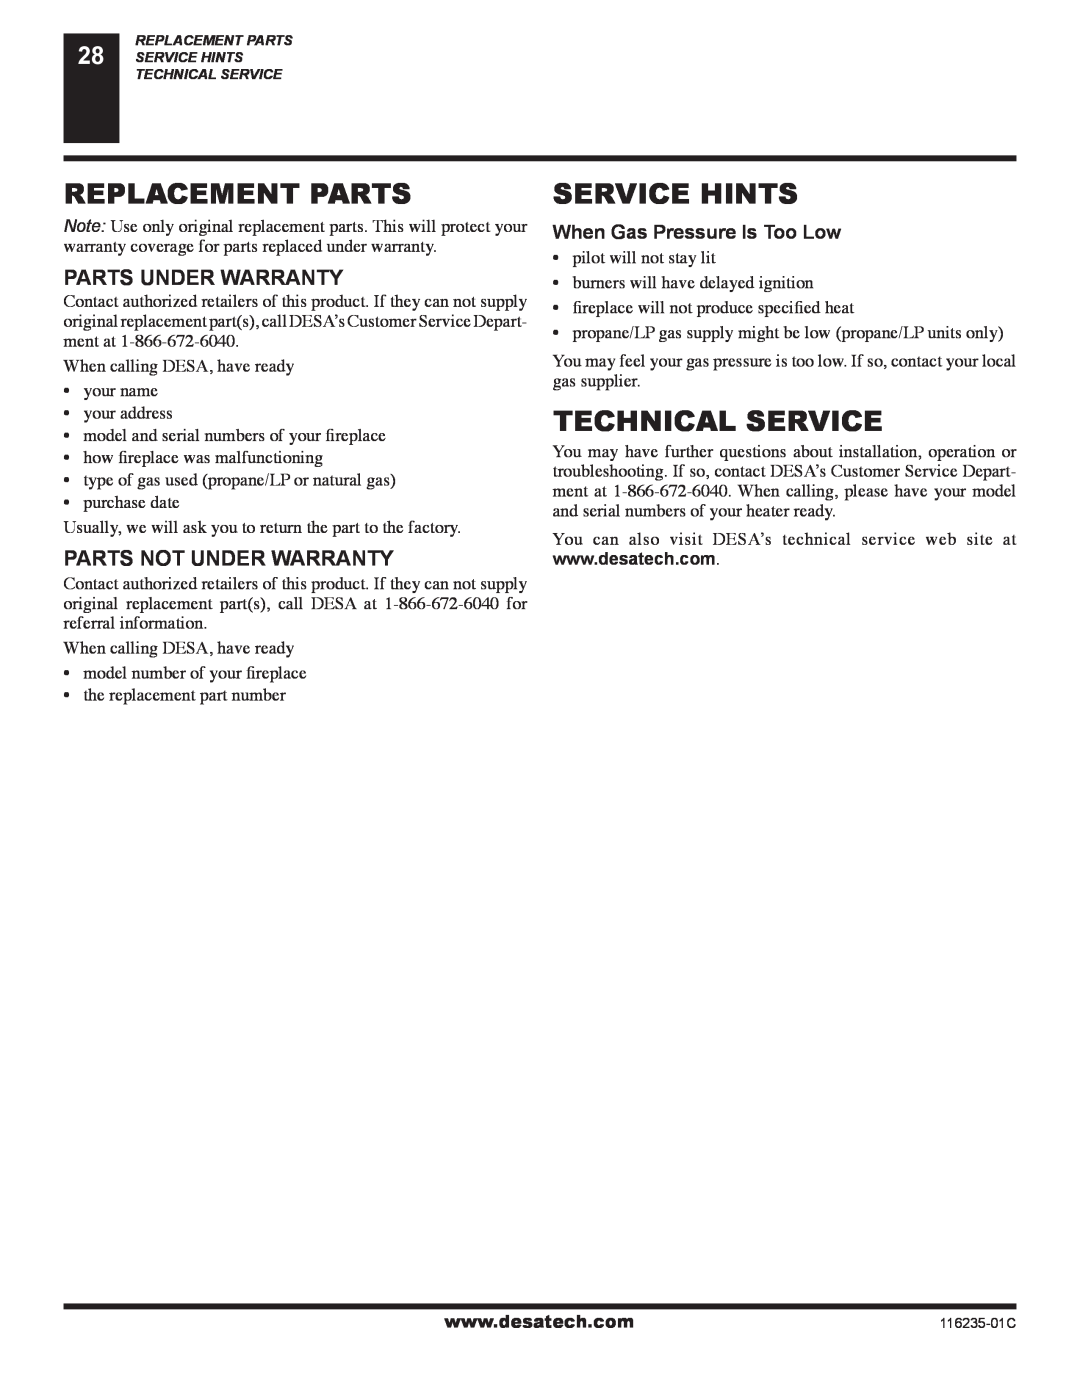 Desa (V)VC36NE Replacement Parts, Service Hints, Technical Service, Parts Under Warranty, Parts Not Under Warranty 